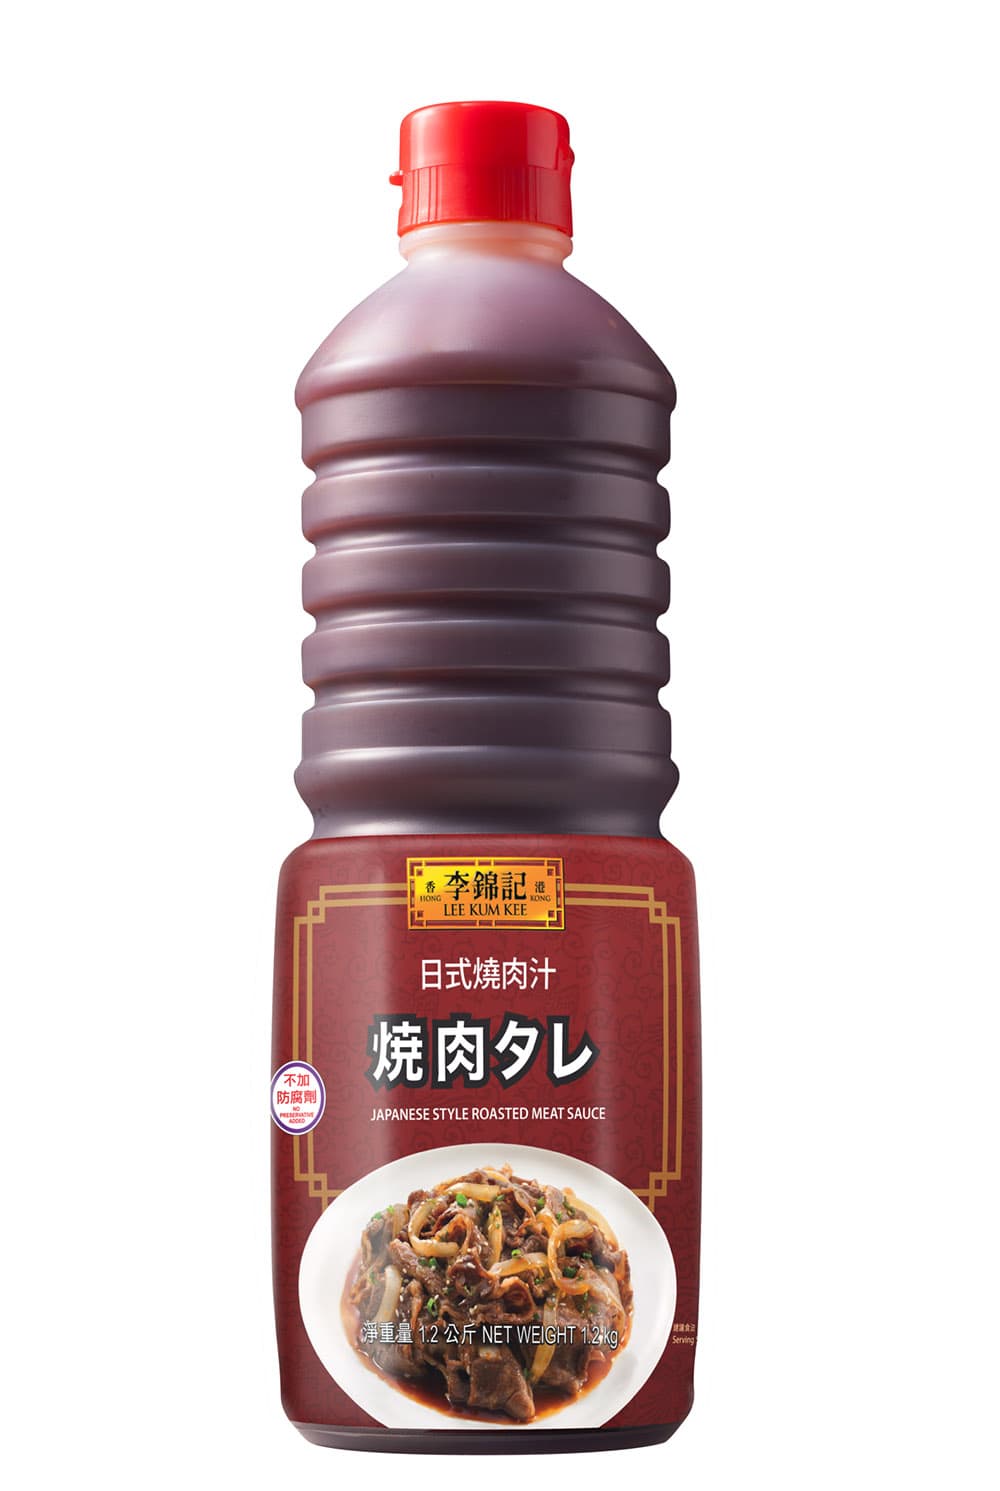 Japanese Style Roasted Meat Sauce